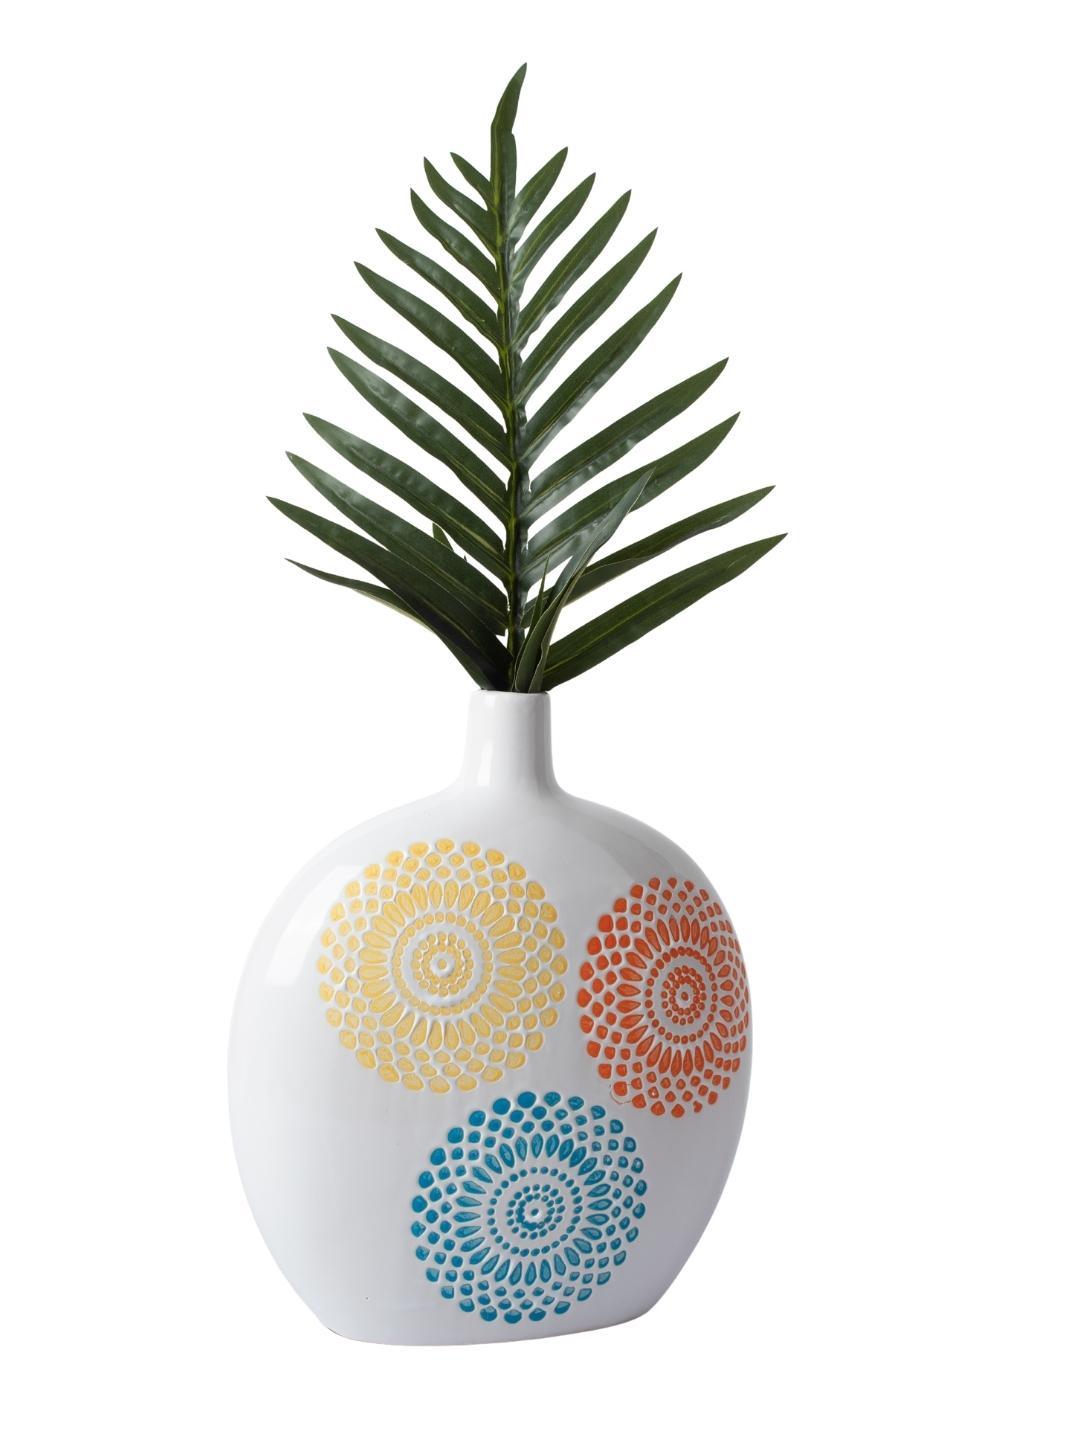 Decorative Ceramic Flower Vase - White Oval, Glossy